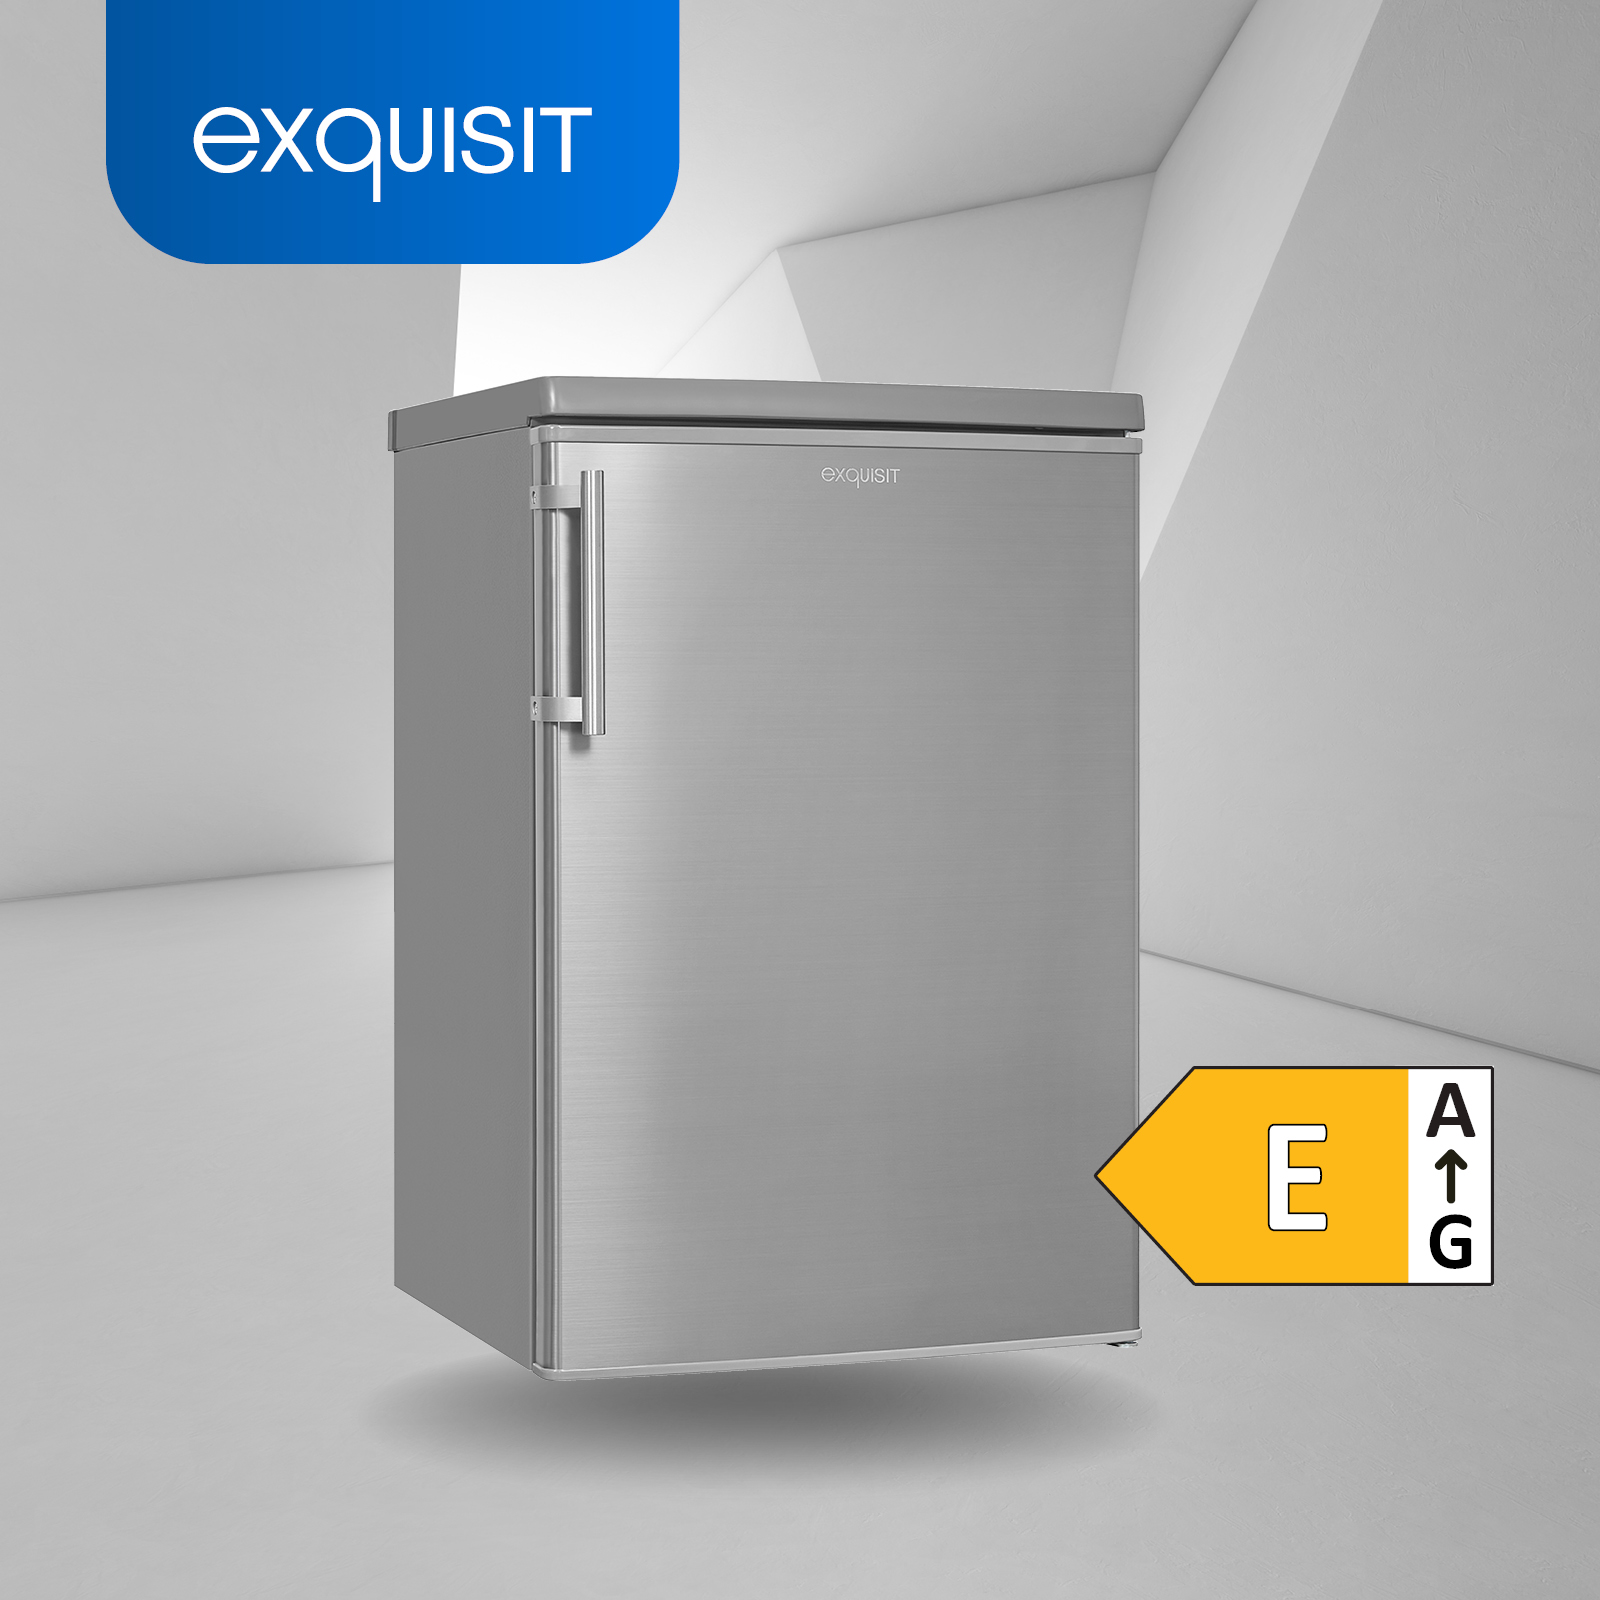 EXQUISIT KS16-4-HE-040E 855 inoxlook E, (139,00 mm kWh/Jahr, Kühlschrank hoch, Edelstahloptik)